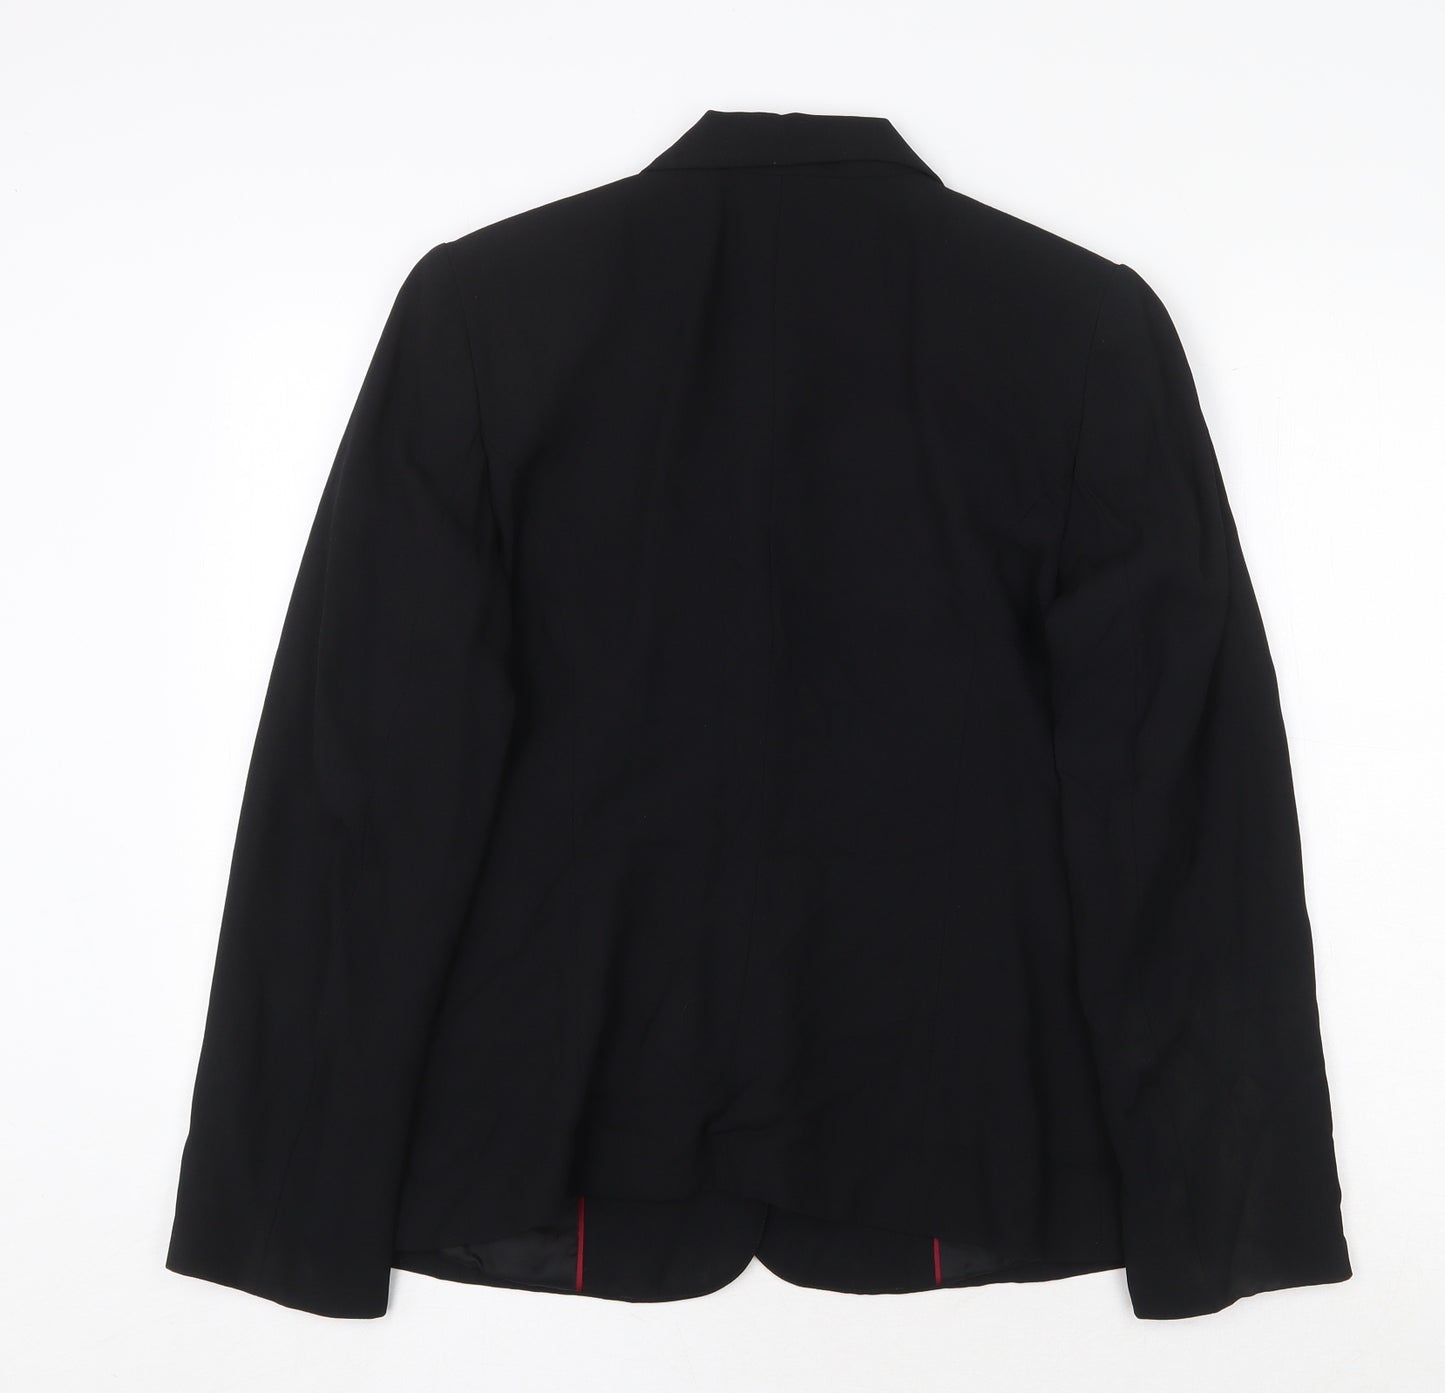 Roman Originals Womens Black Polyester Jacket Suit Jacket Size 14